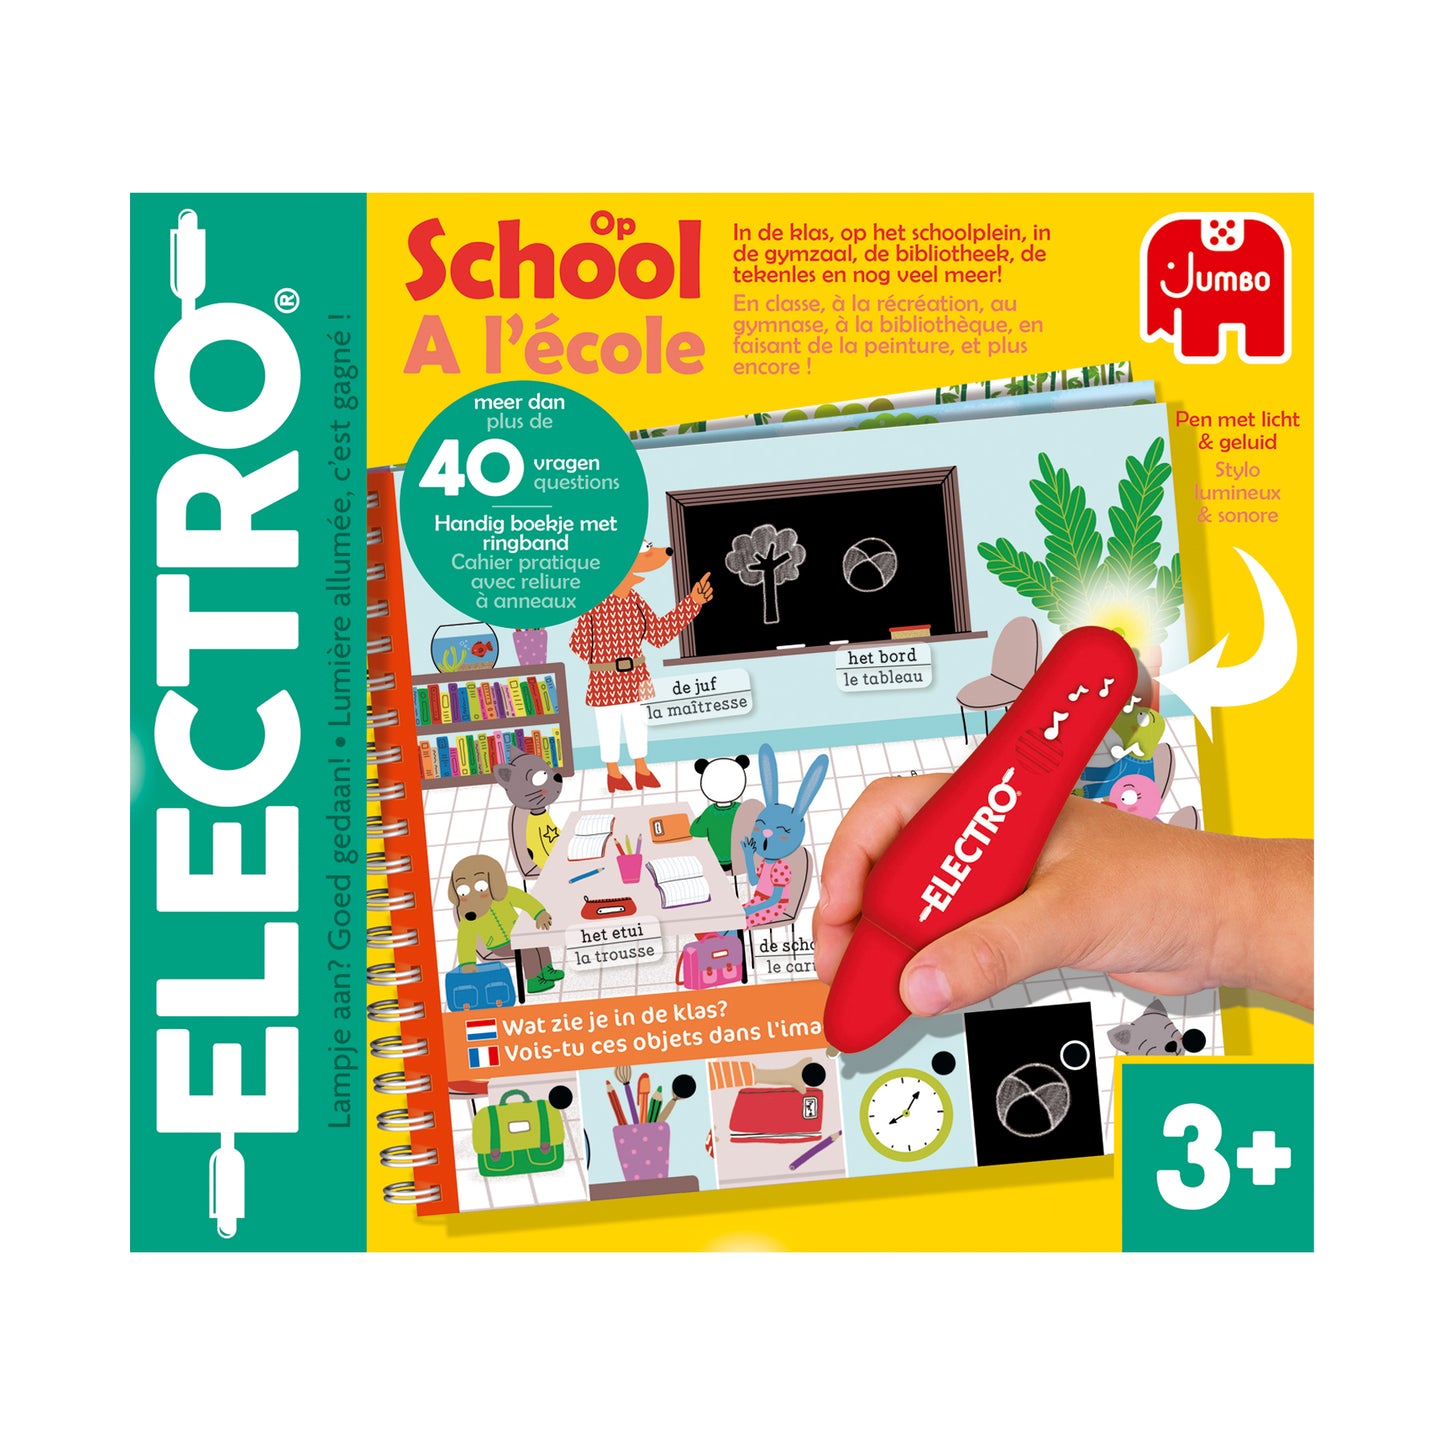 Electro - Electro at school NL (NEW) - product image - Jumboplay.com